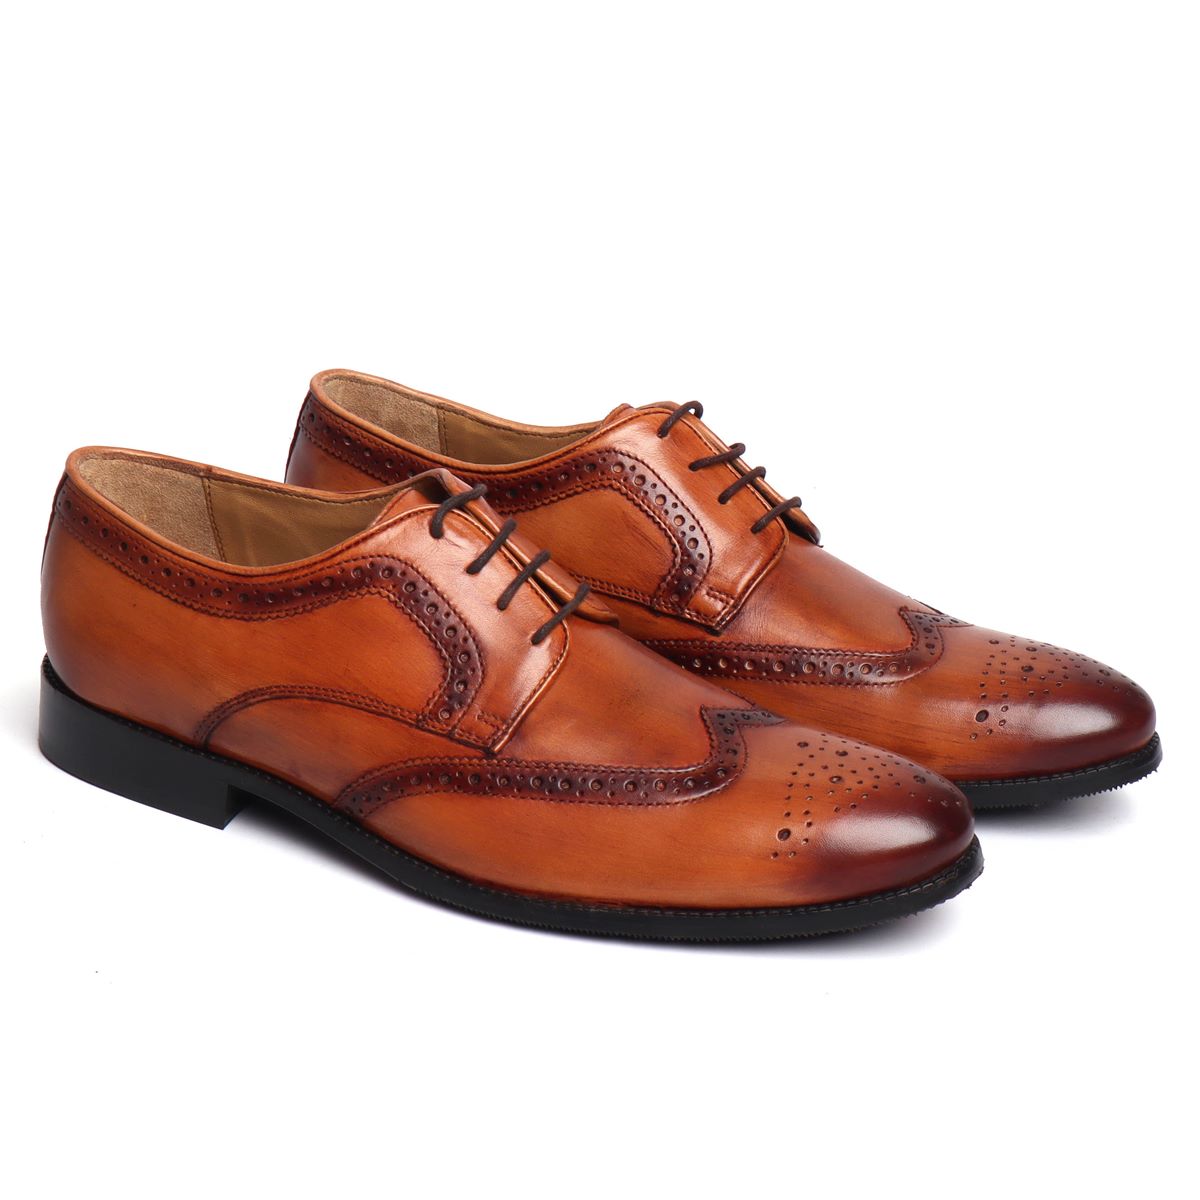 Wooden Look Full Brogue Wingtip Shoes In Genuine Tan Leather By Brune